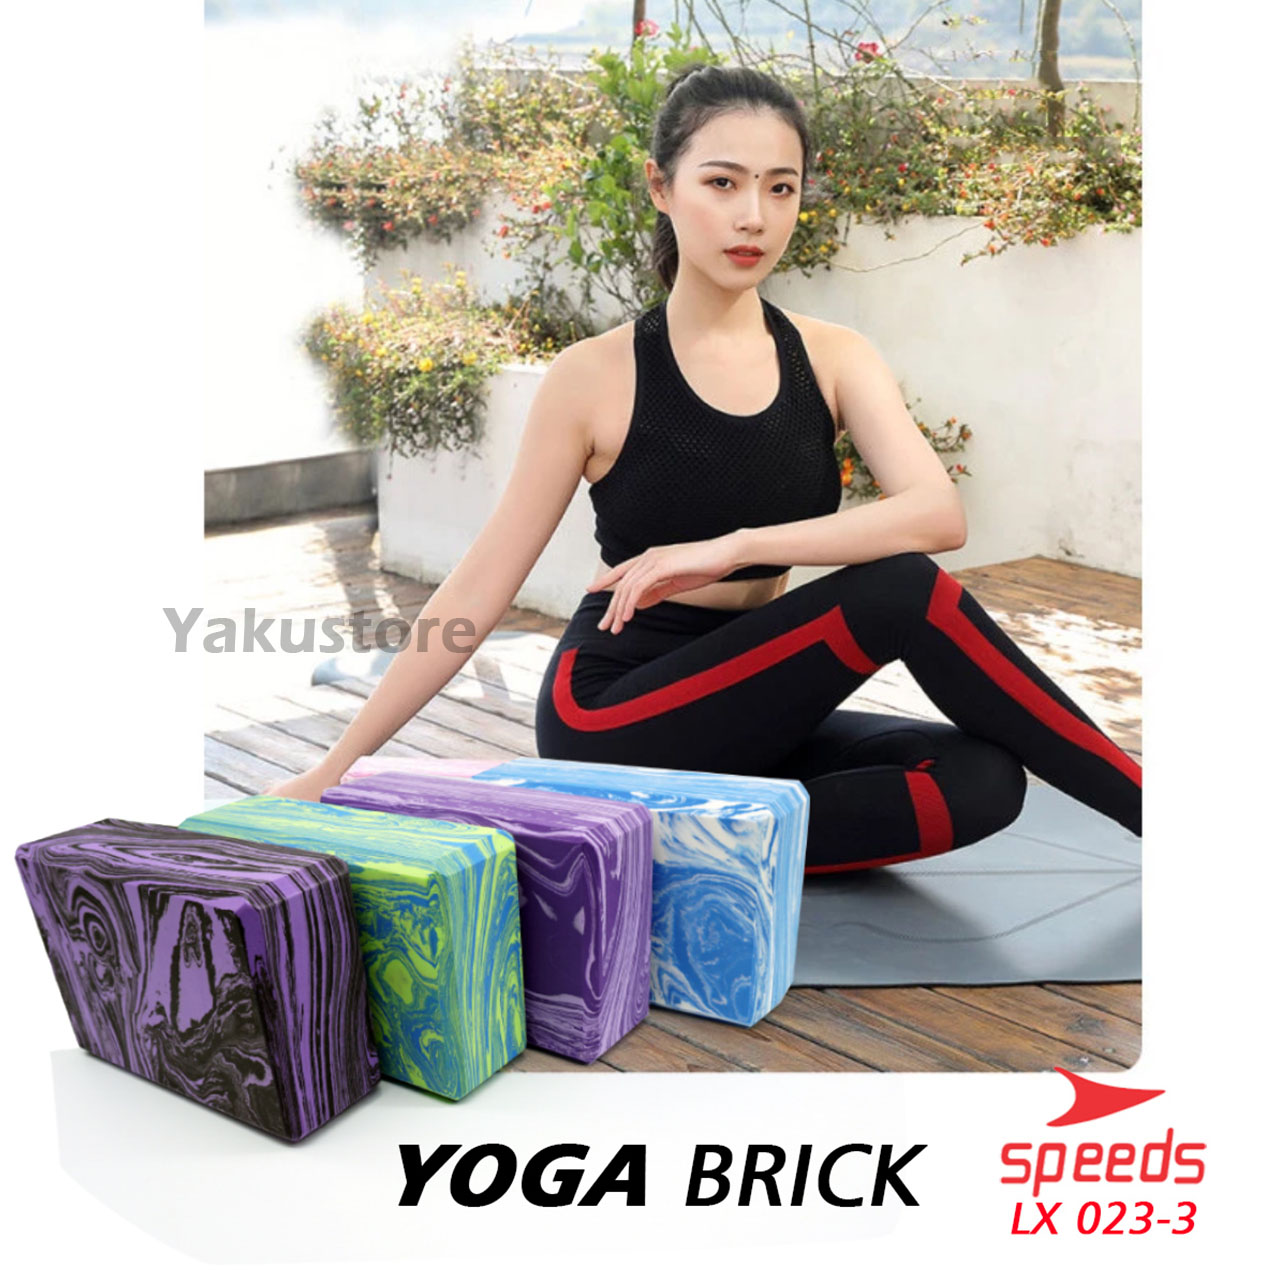 Promo Peralatan Yoga Marketplace Bulan ini